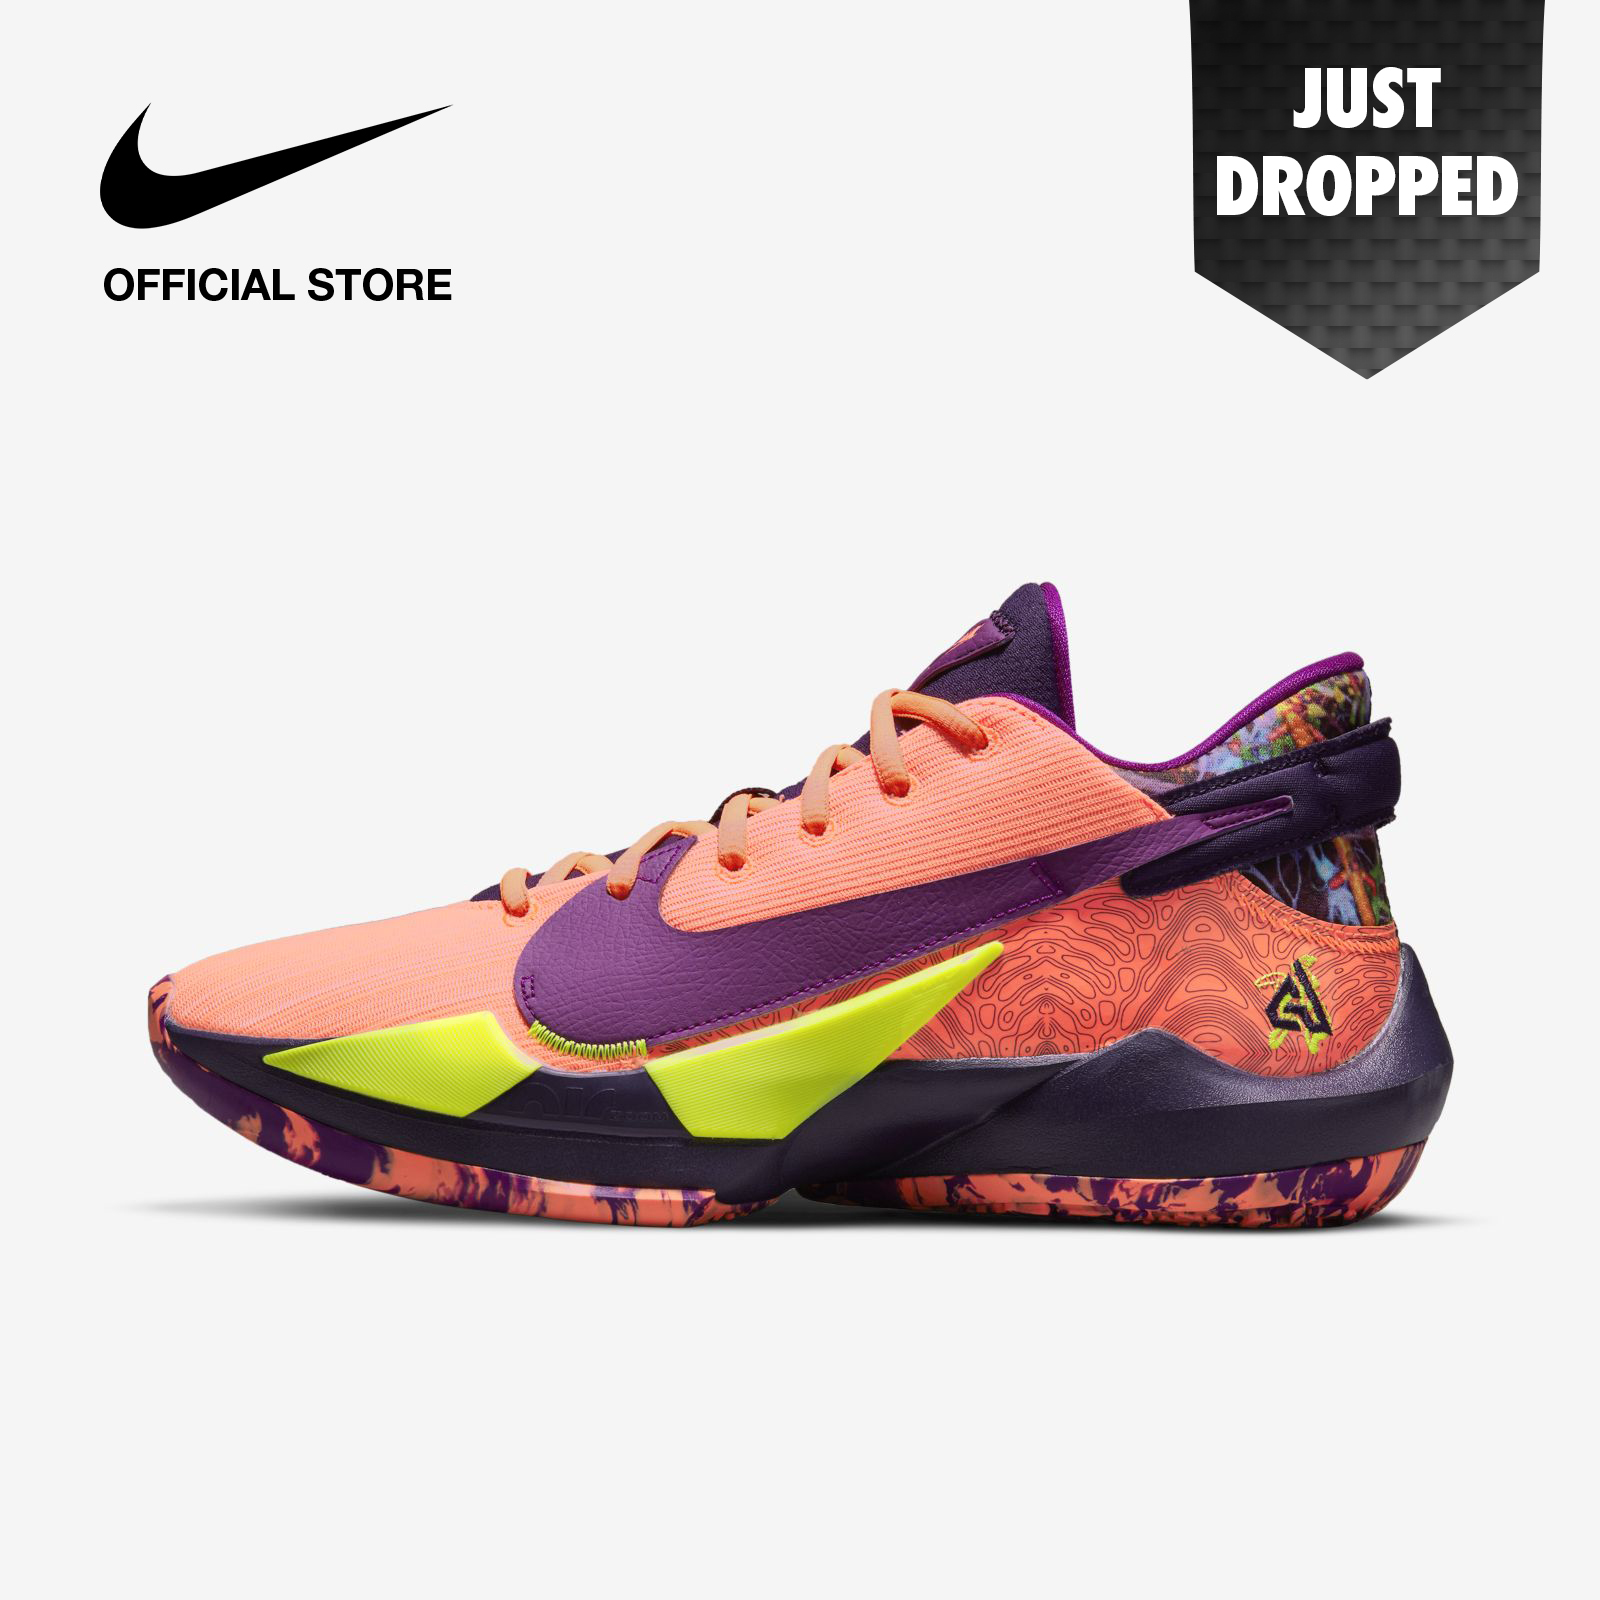 Nike Men's Freak 2 Basketball Shoes - Bright Mango ไนกี้ รองเท้าบาสเก็ตบอลผู้ชาย ฟรีค 2 - สีมะม่วง